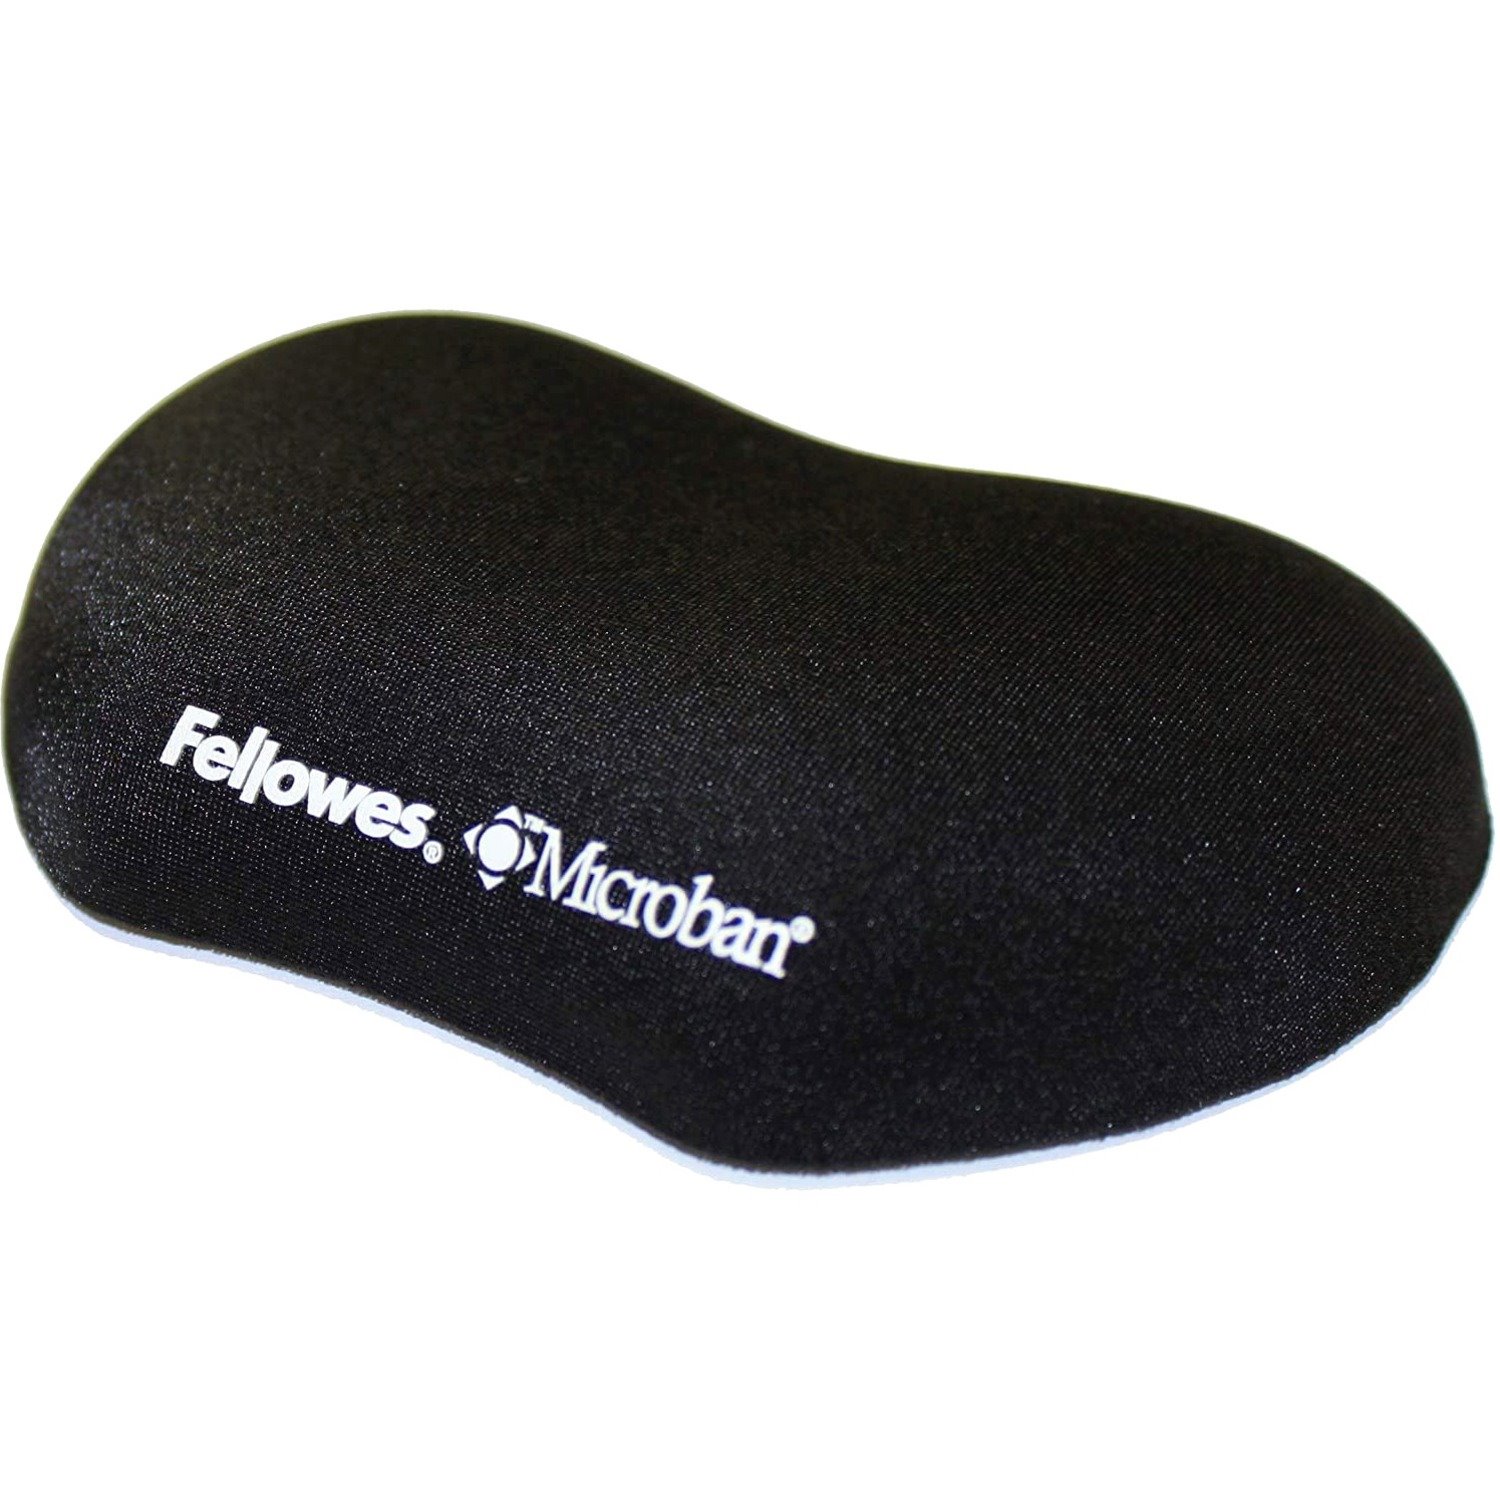 Fellowes PlushTouch Mini Wrist Rest with FoamFusion Technology - Black